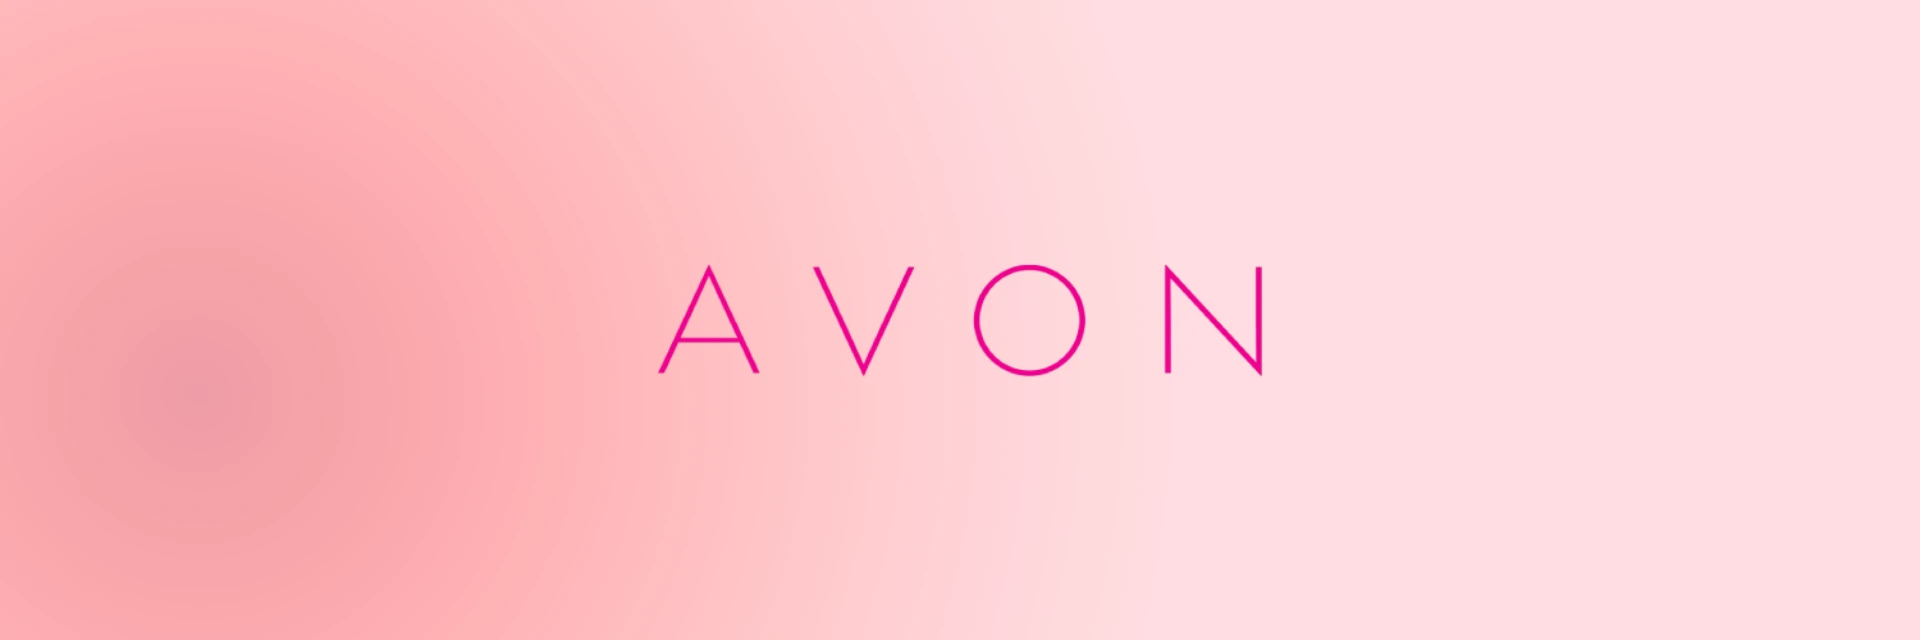 Image of Avon Perfume Brand